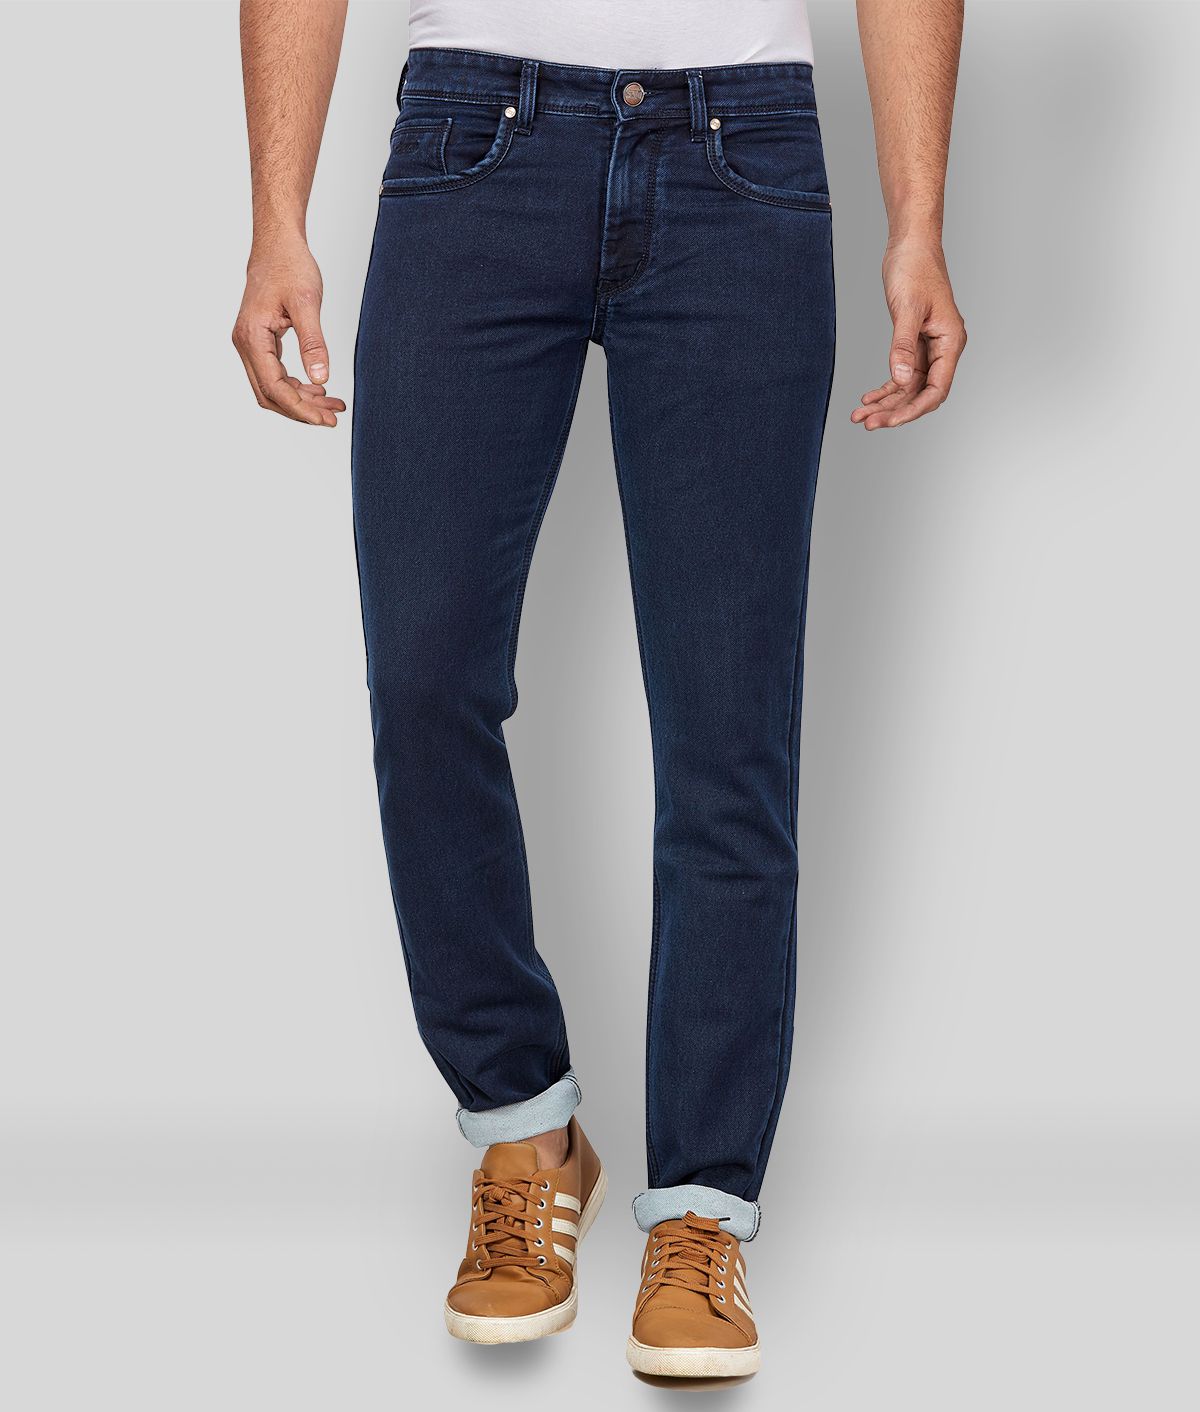 Hasasi Denim - Navy Blue 100% Cotton Regular Fit Men's Jeans ( Pack of 1 )